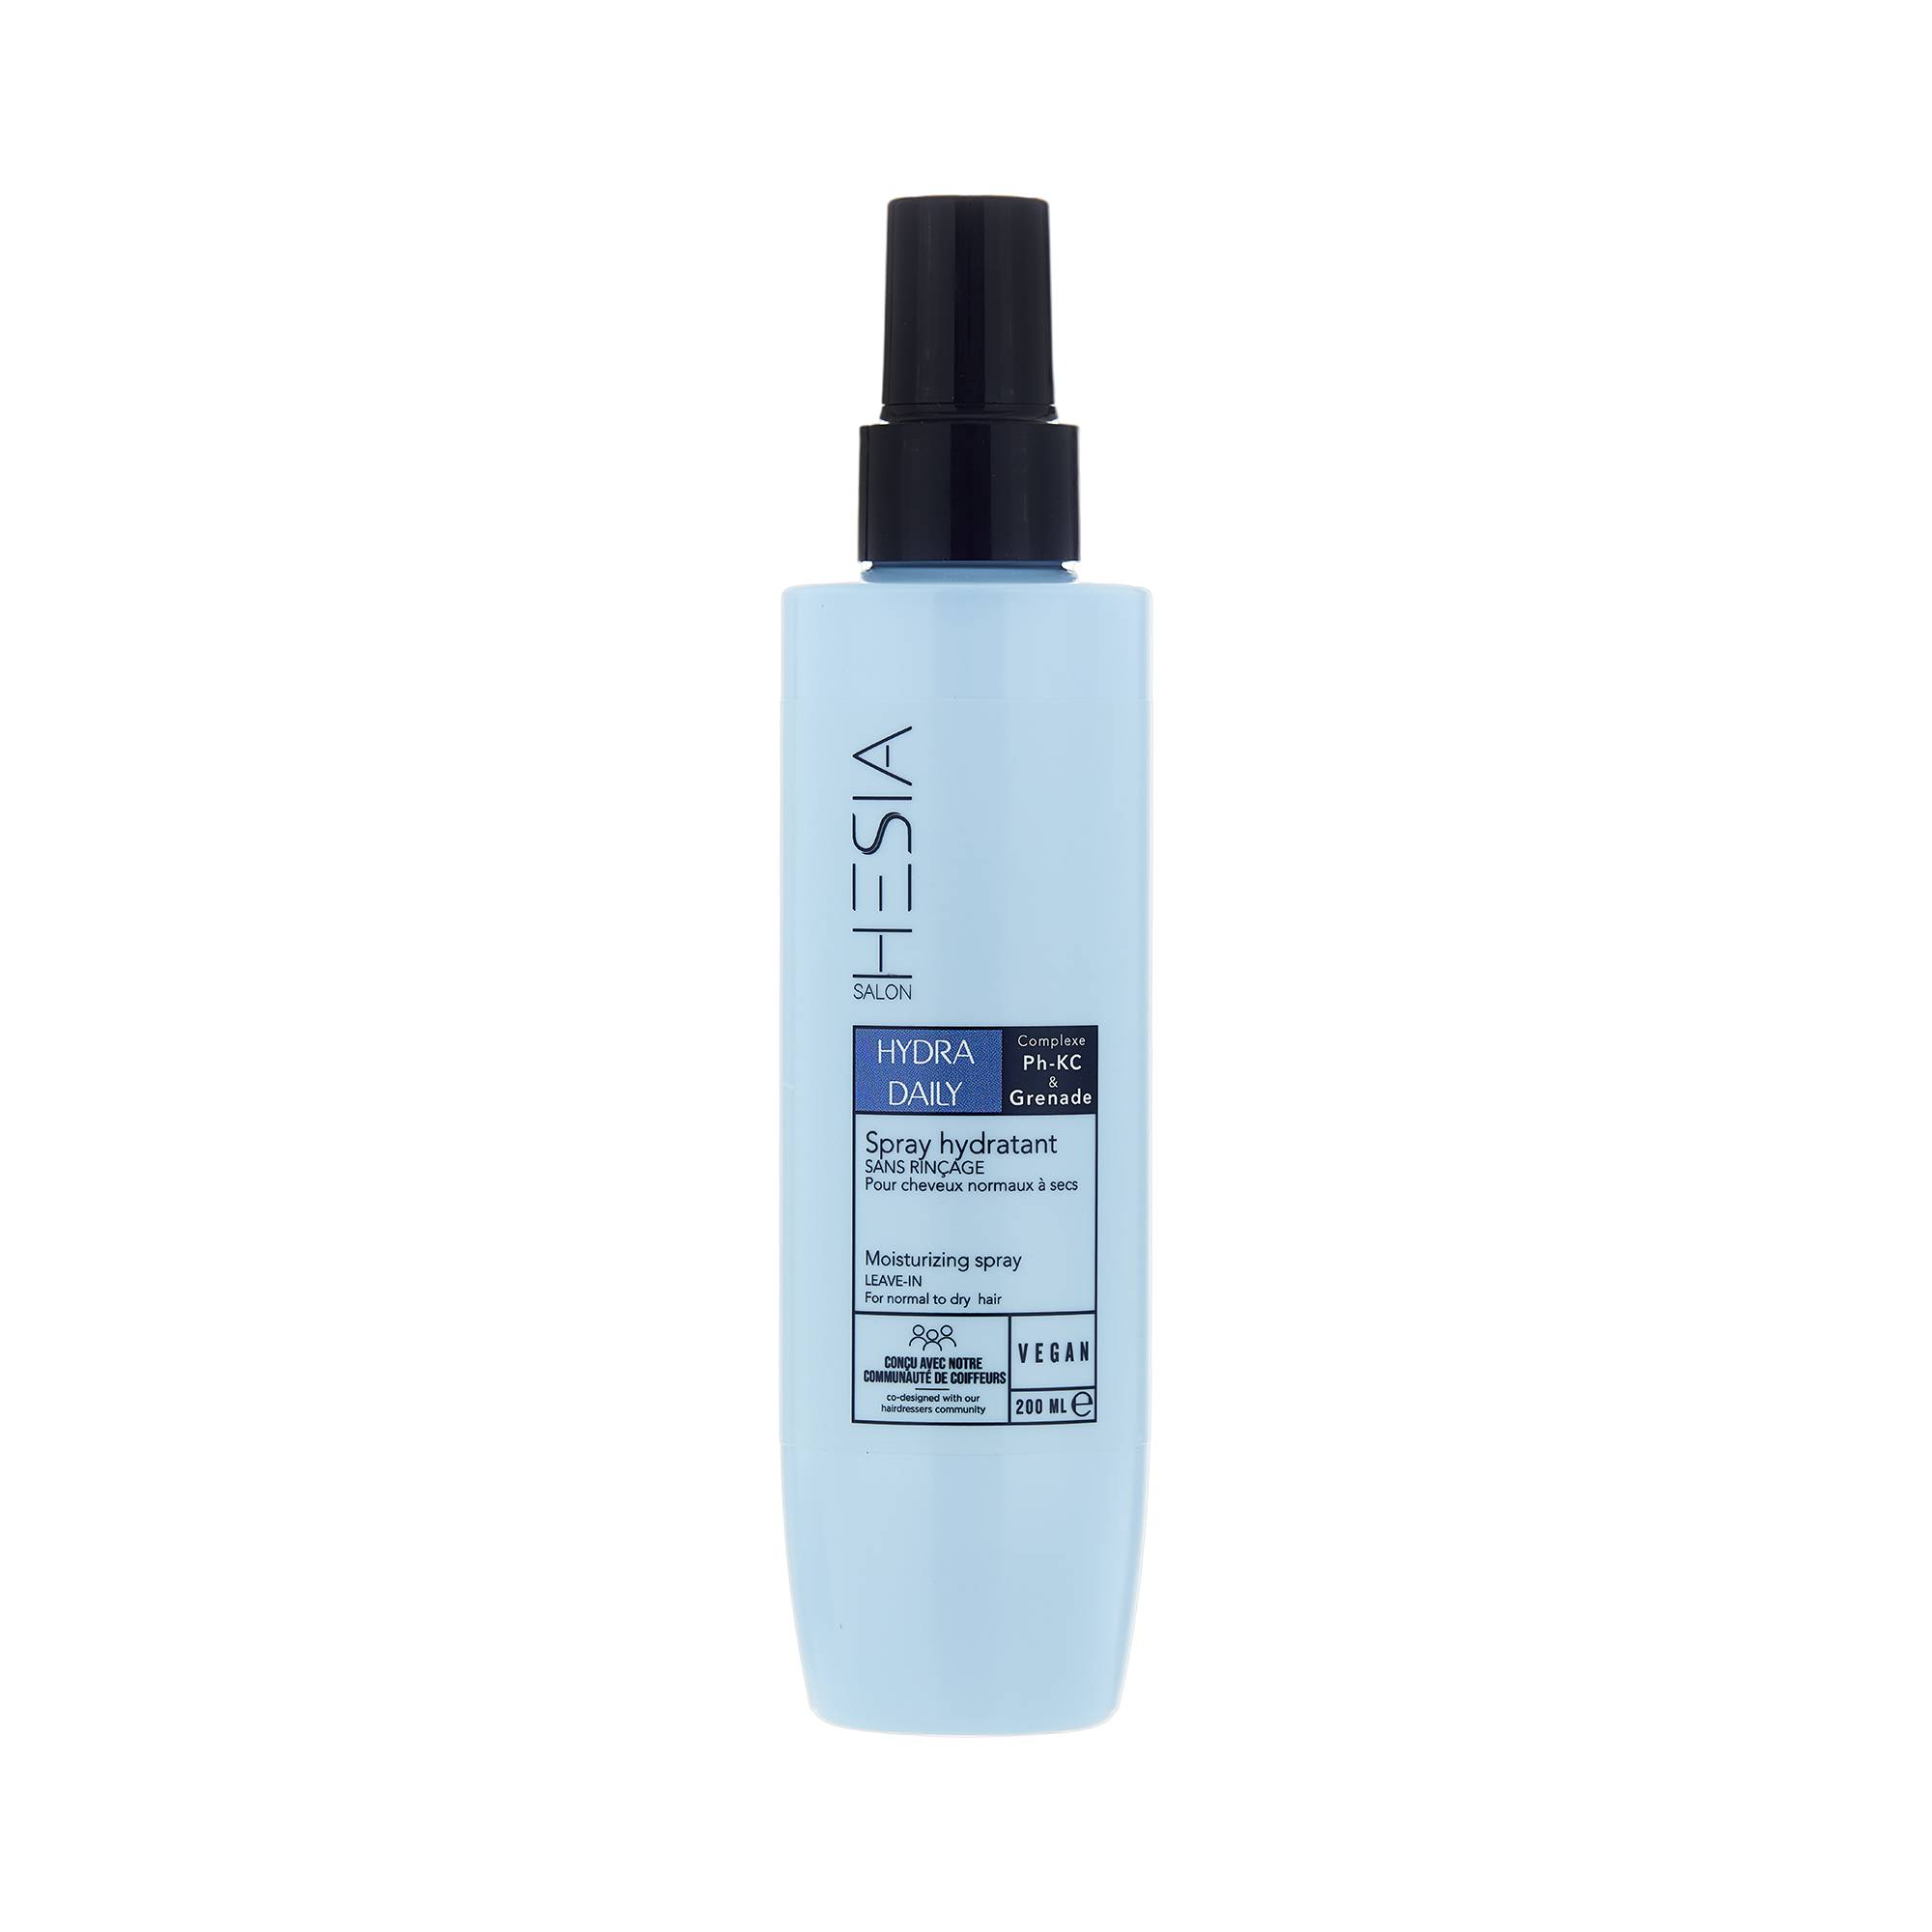 Spray hydratant sans rinçage Hydra Daily de la marque HESIA Salon Contenance 200ml - 1